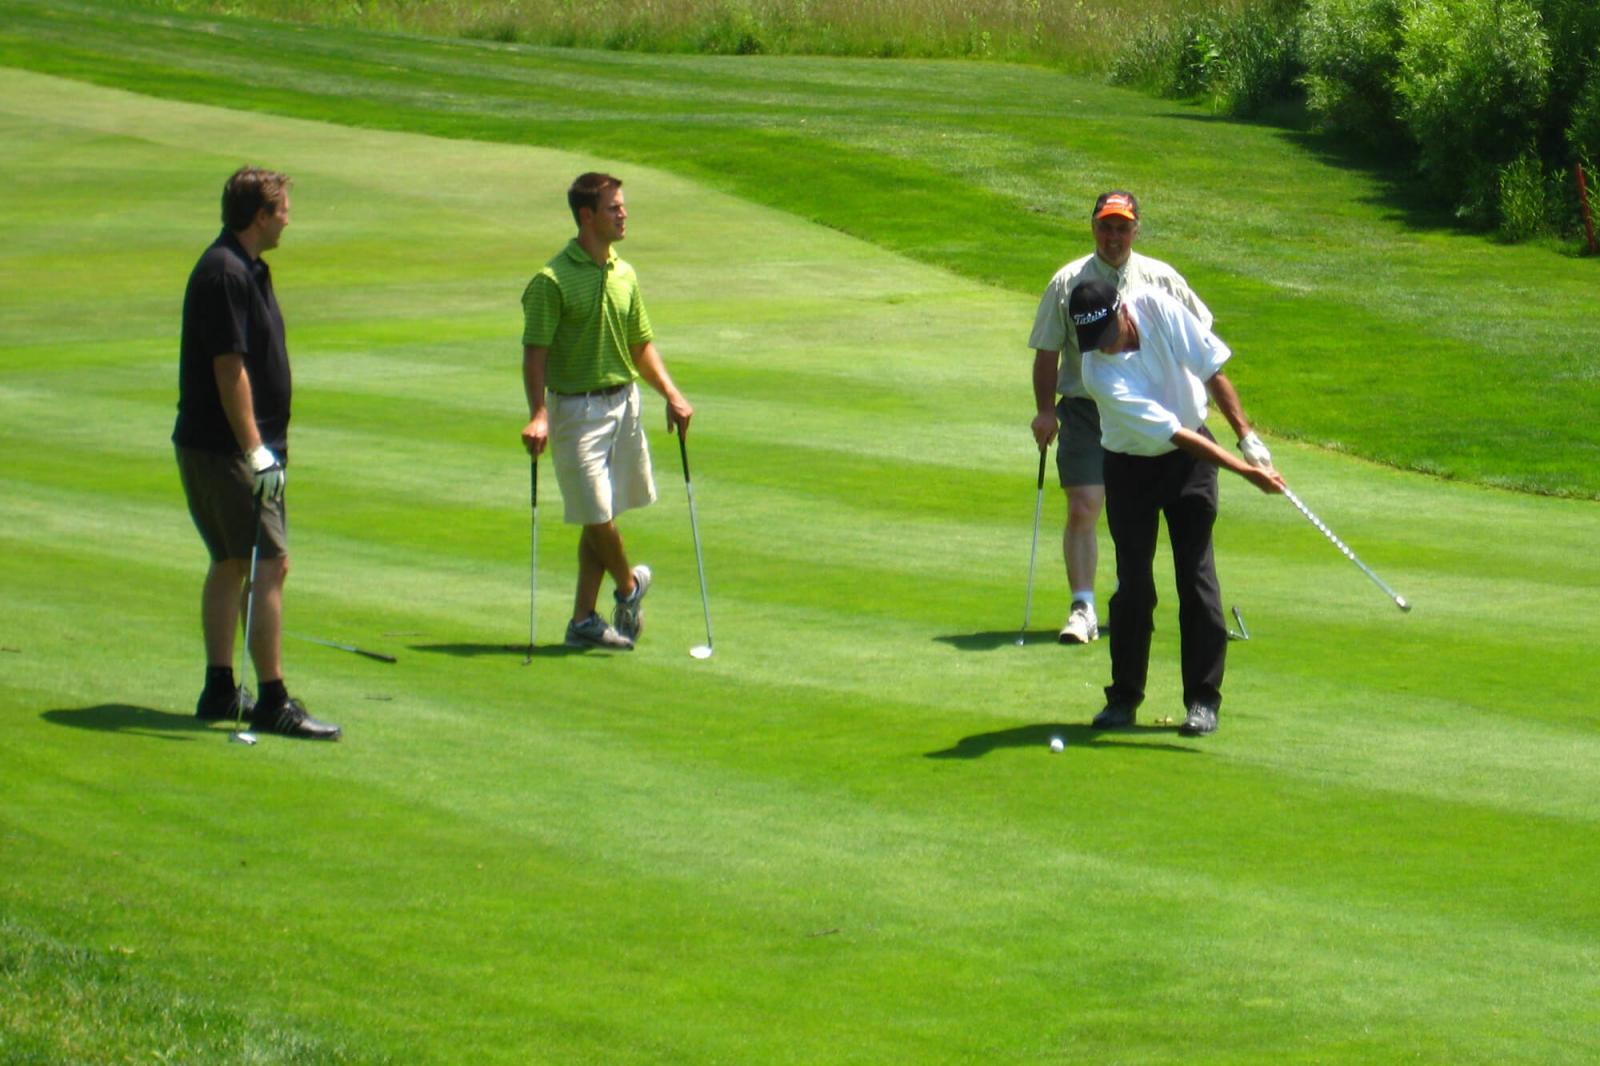 LO golf season offers many benefits